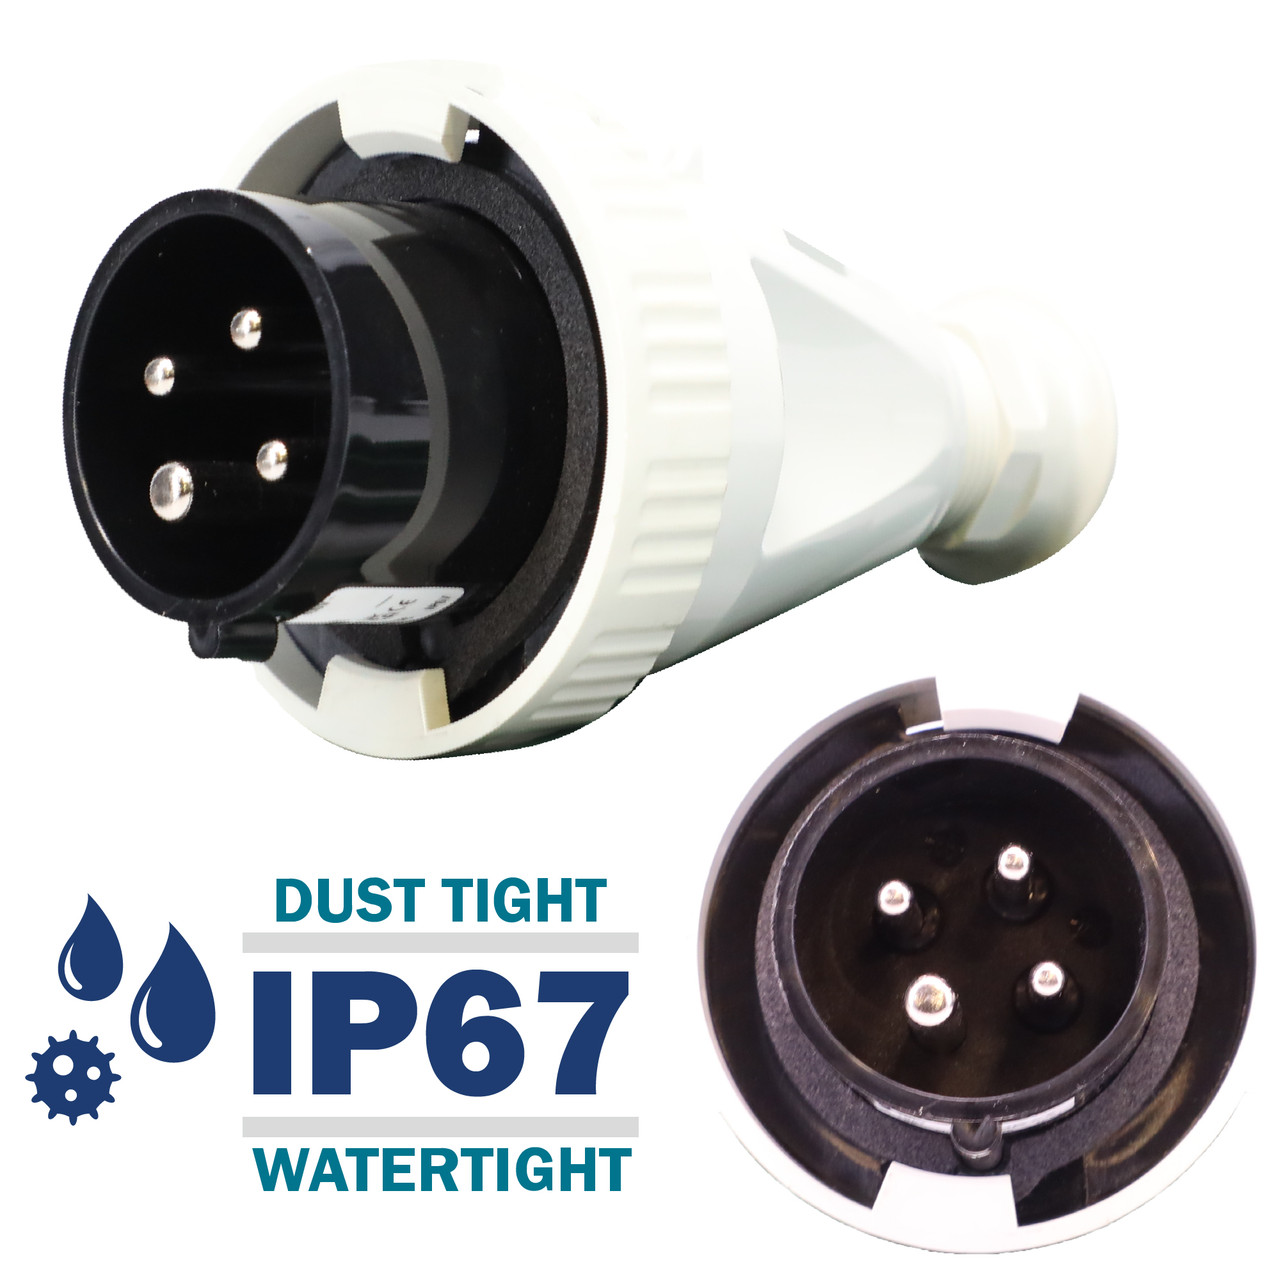 218405 carries an environmental rating of IP67 Watertight